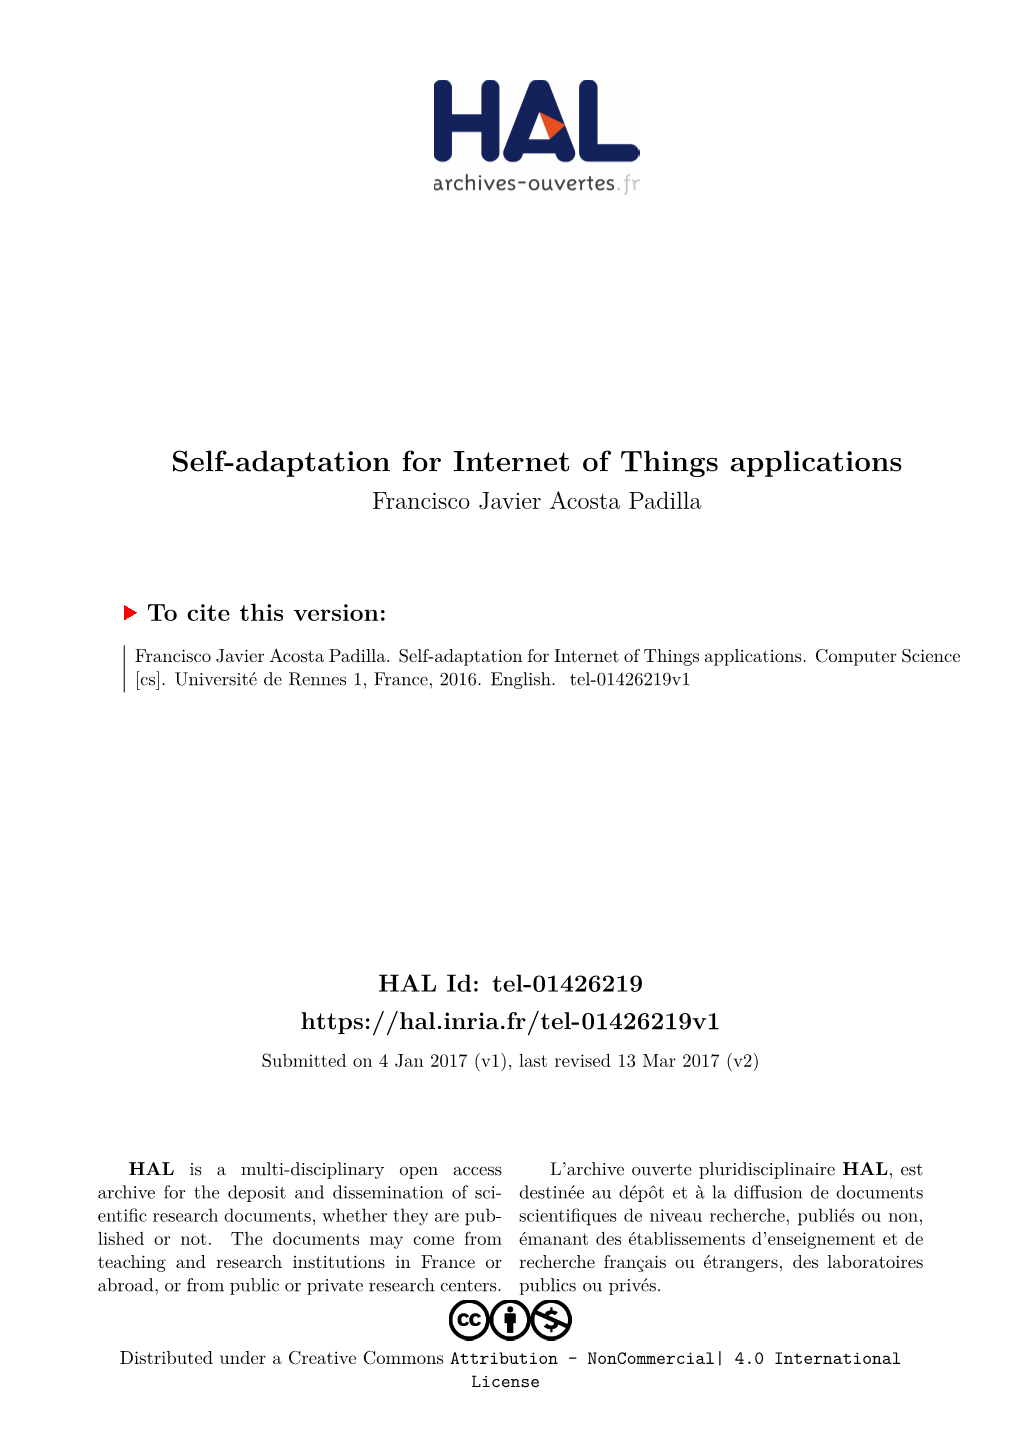 Self-Adaptation for Internet of Things Applications Francisco Javier Acosta Padilla